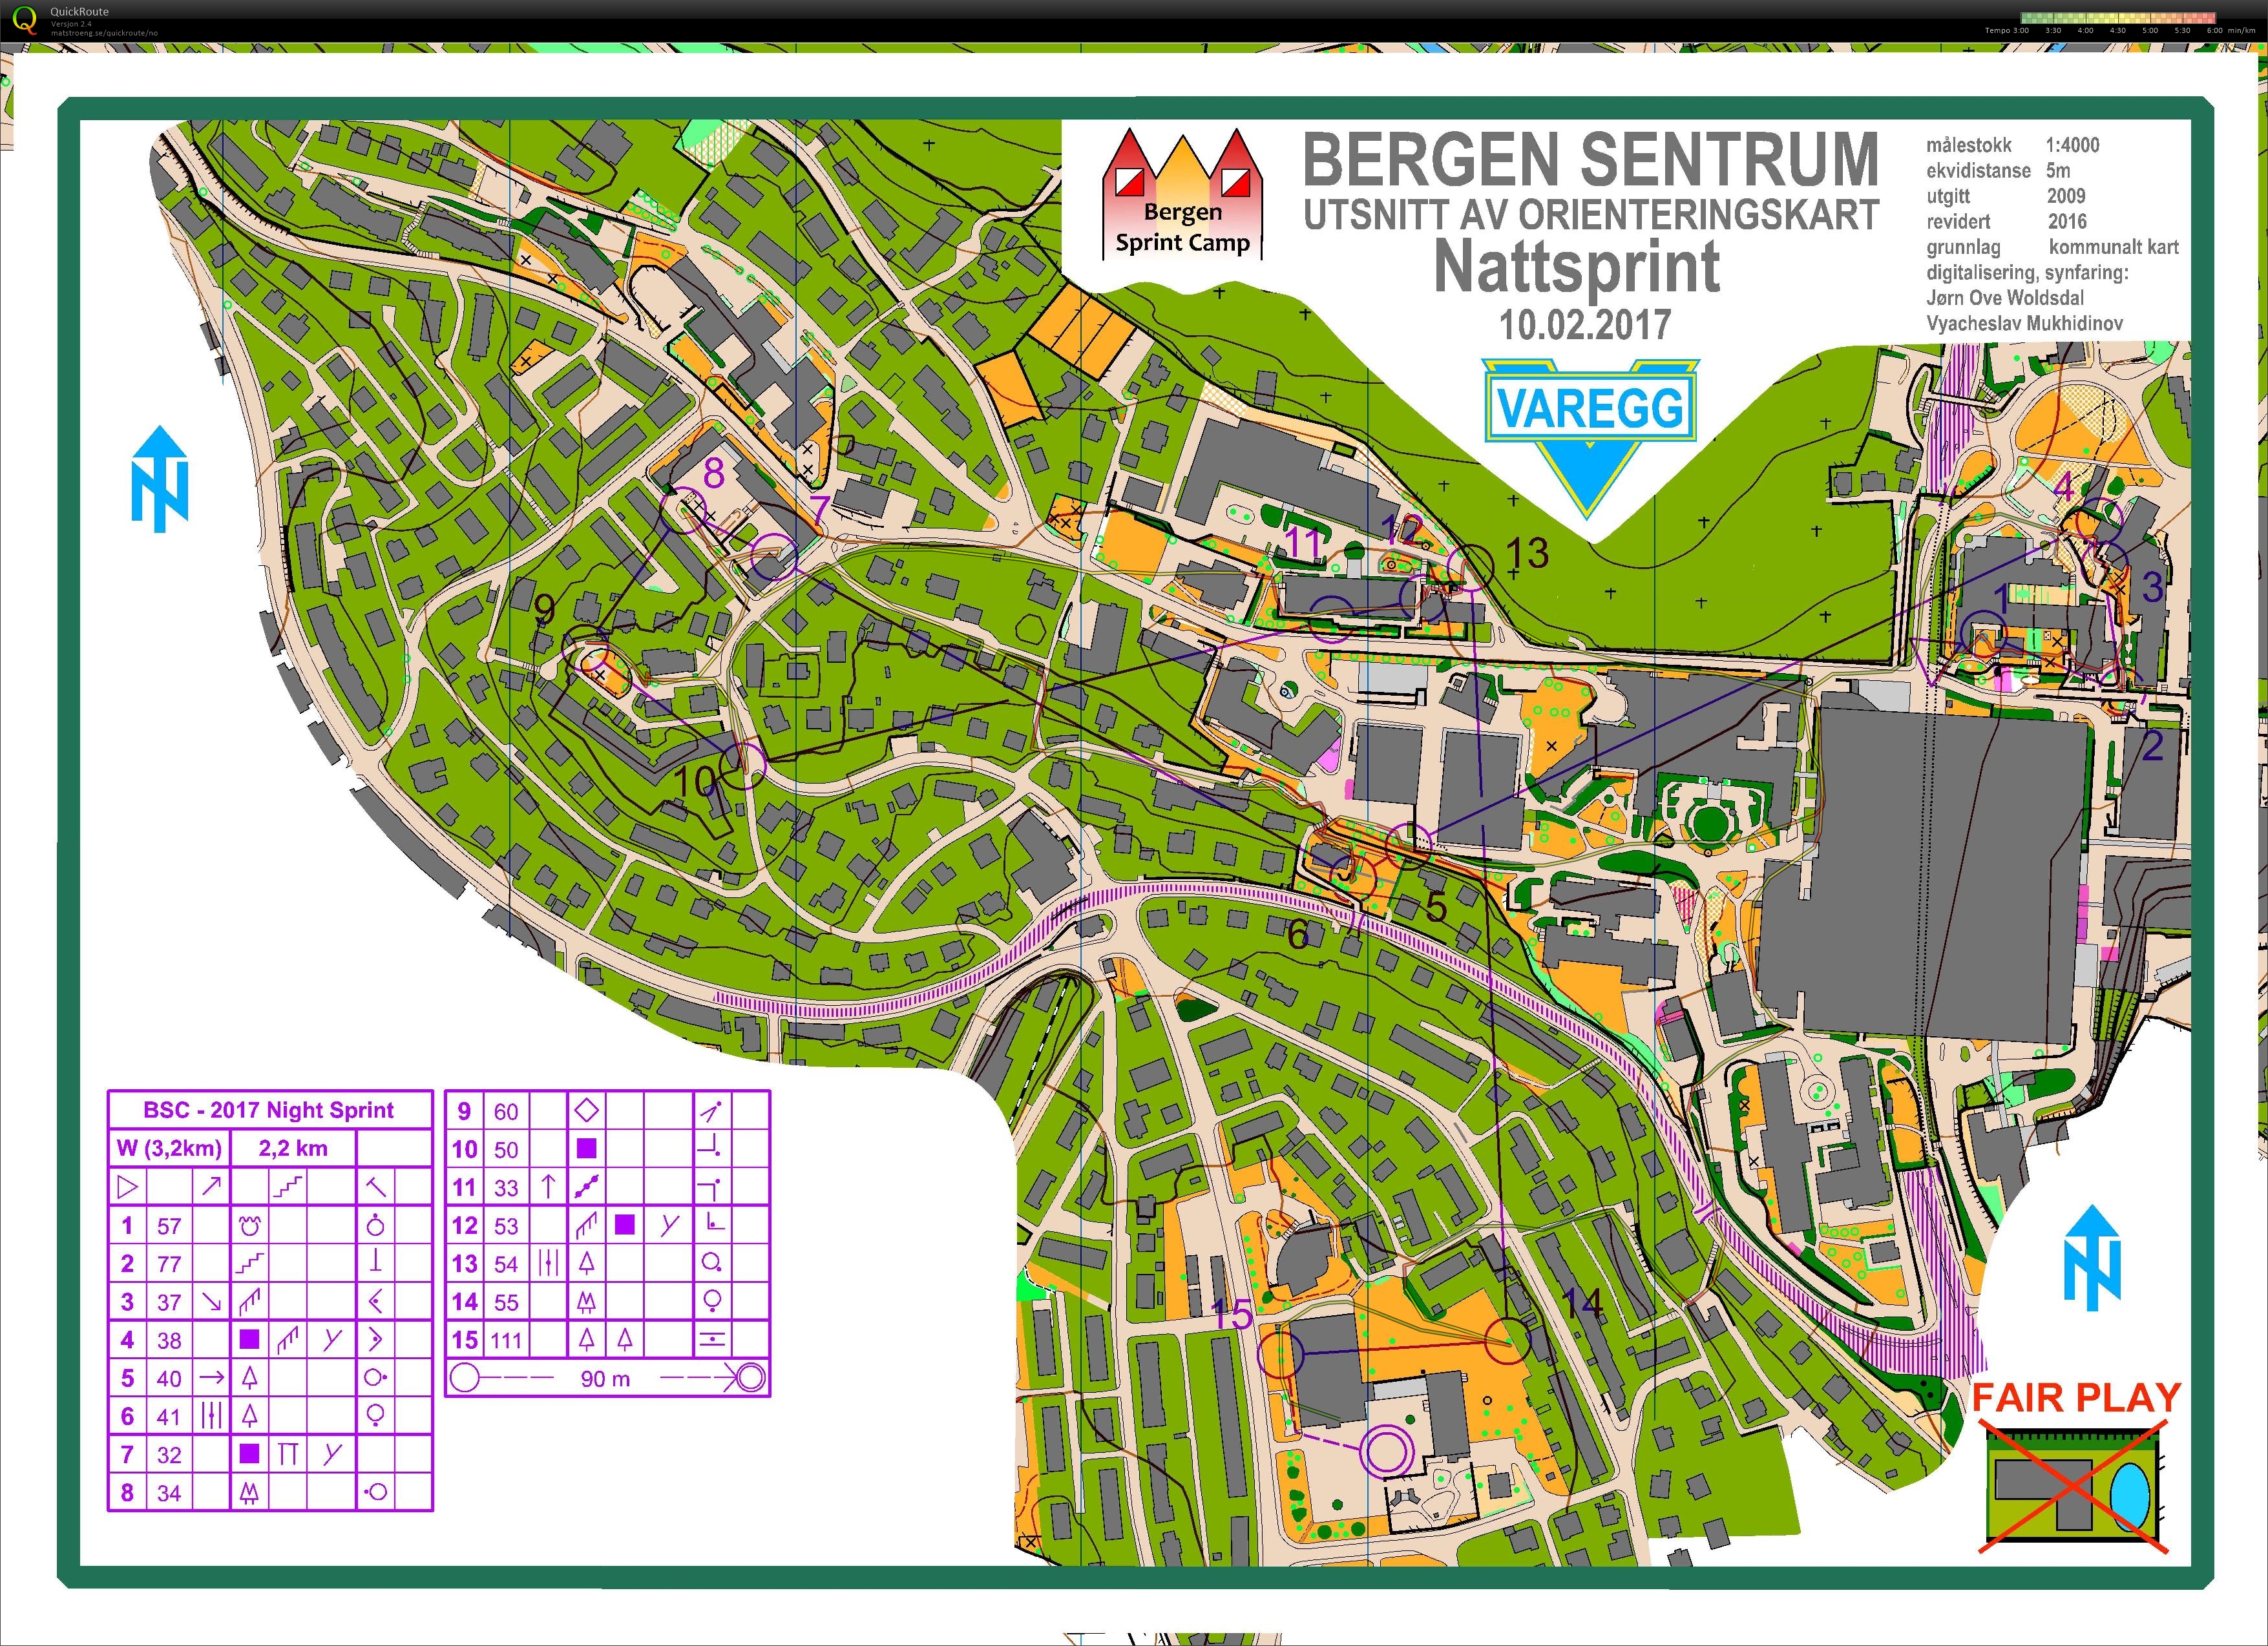 Bergen Sprint Camp Nattsprint (10.02.2017)